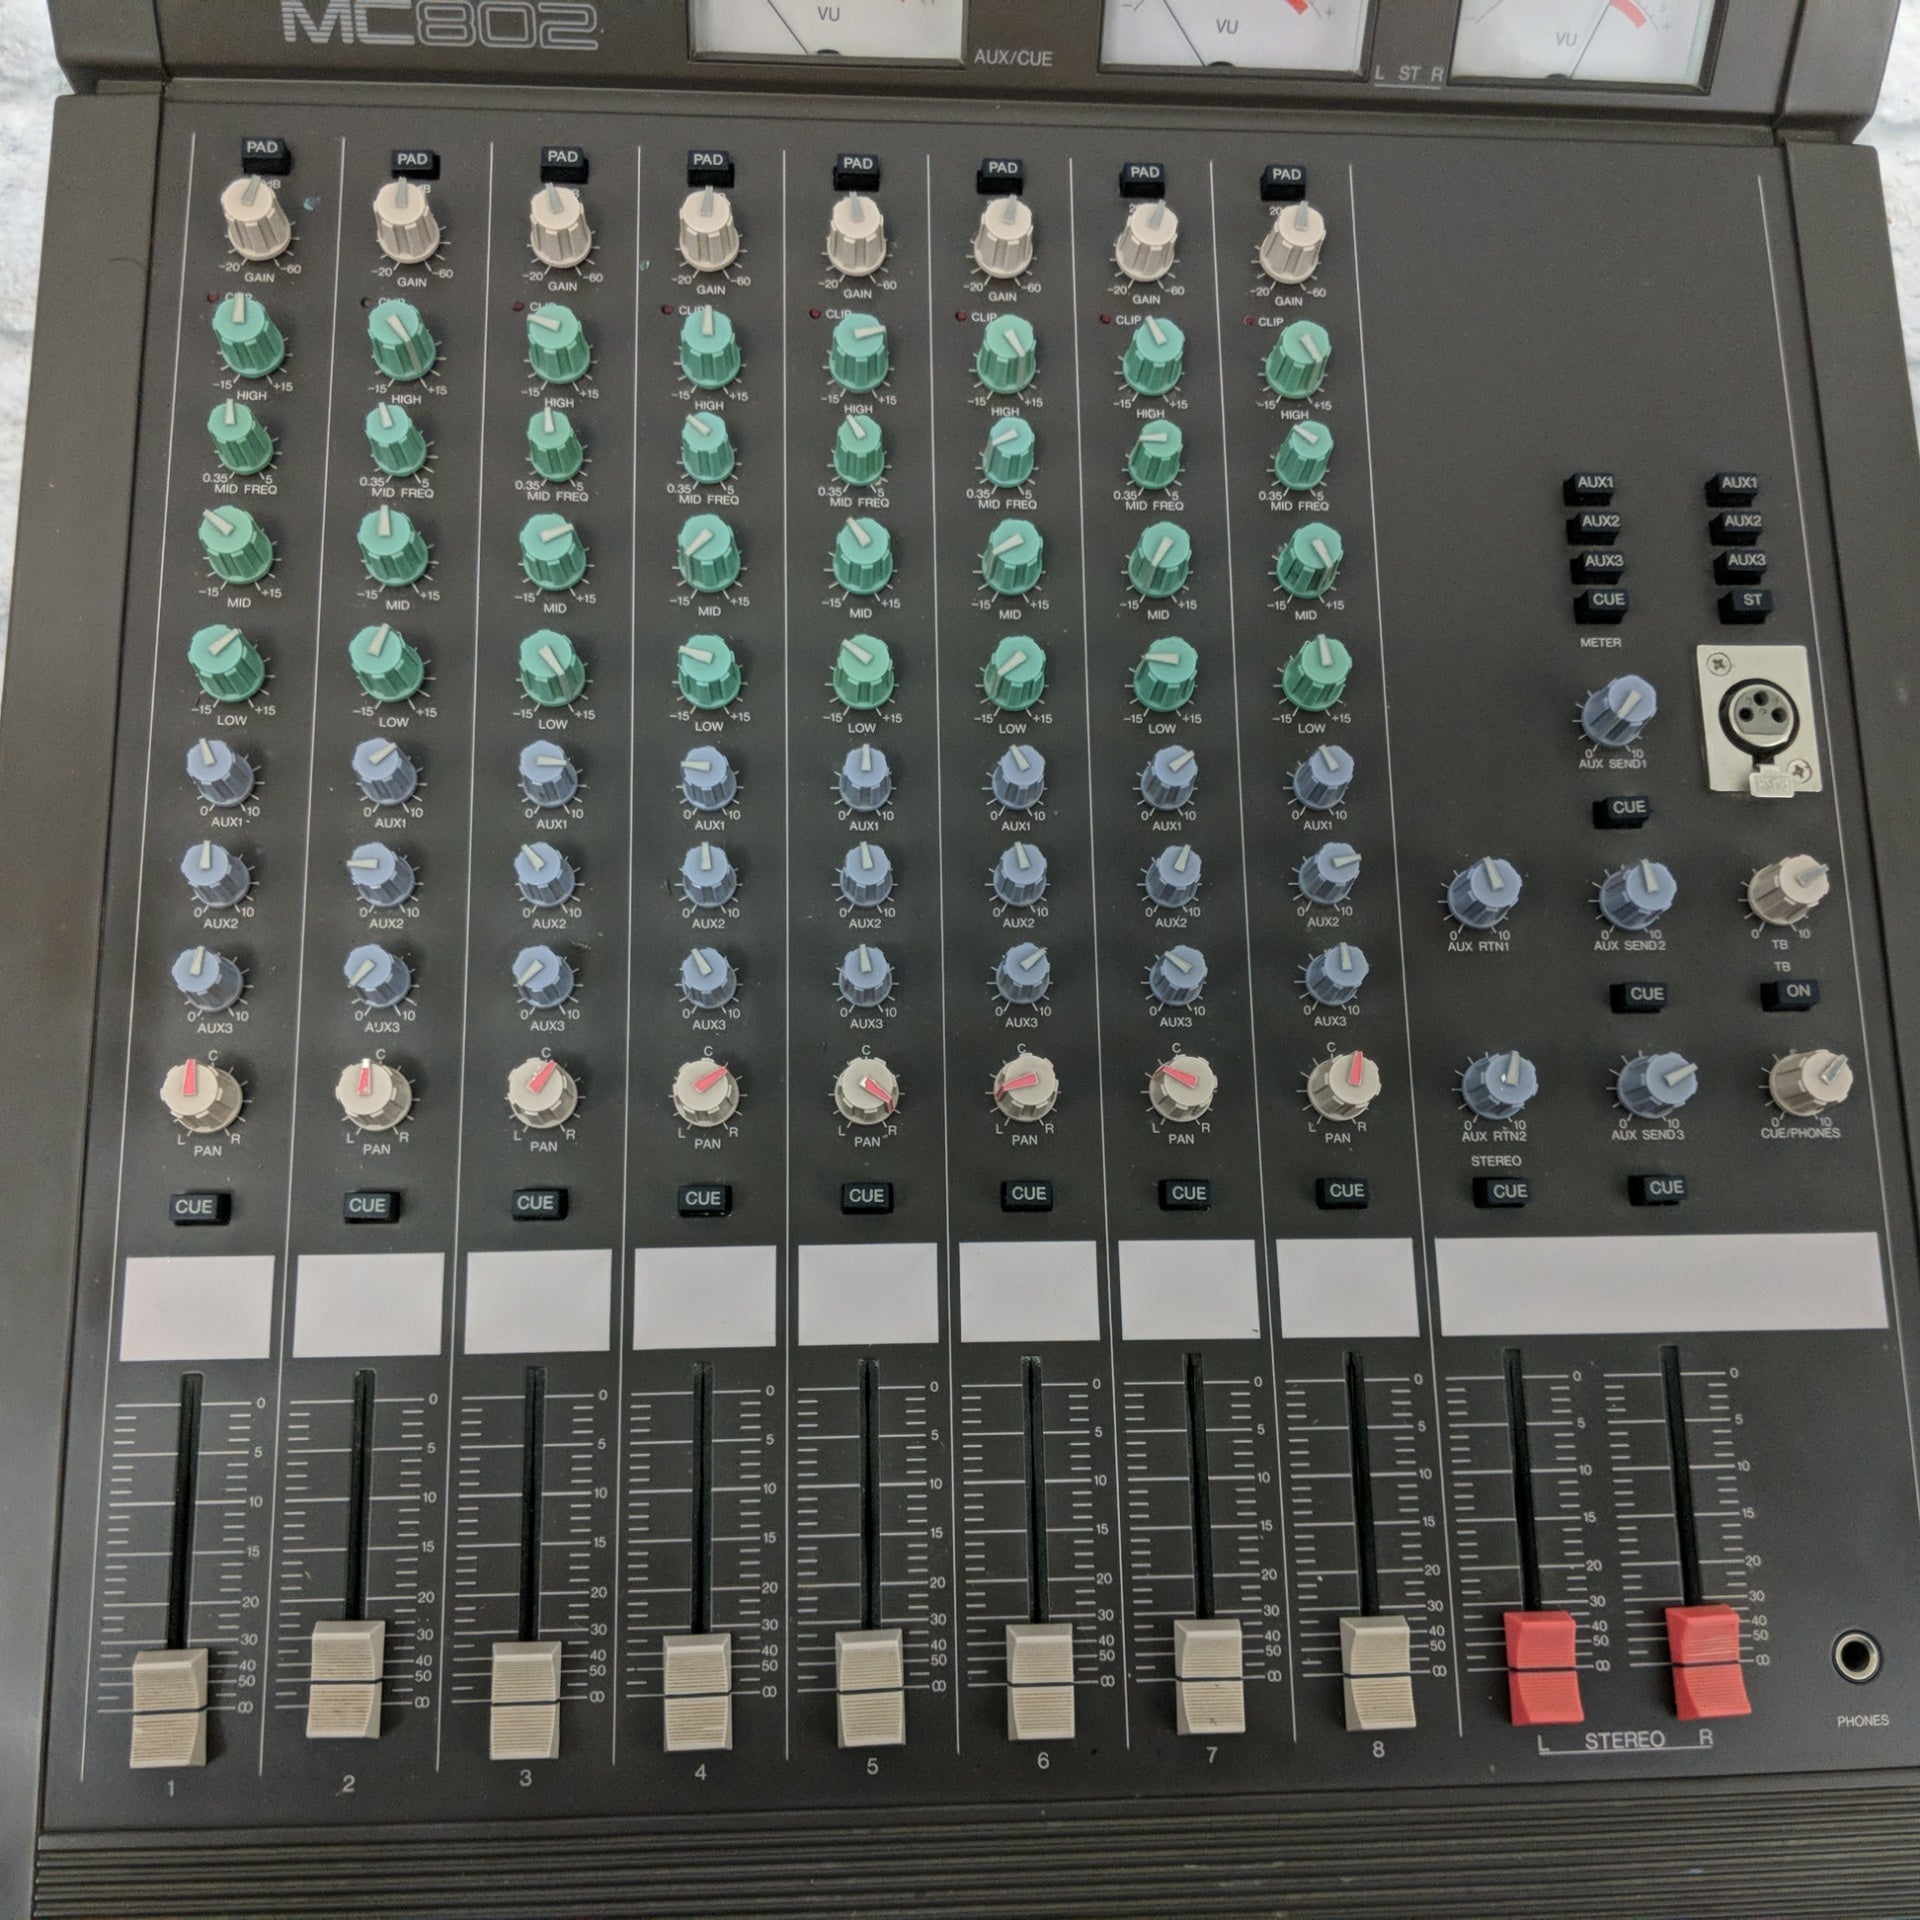 Yamaha MC802 Mixer - Evolution Music